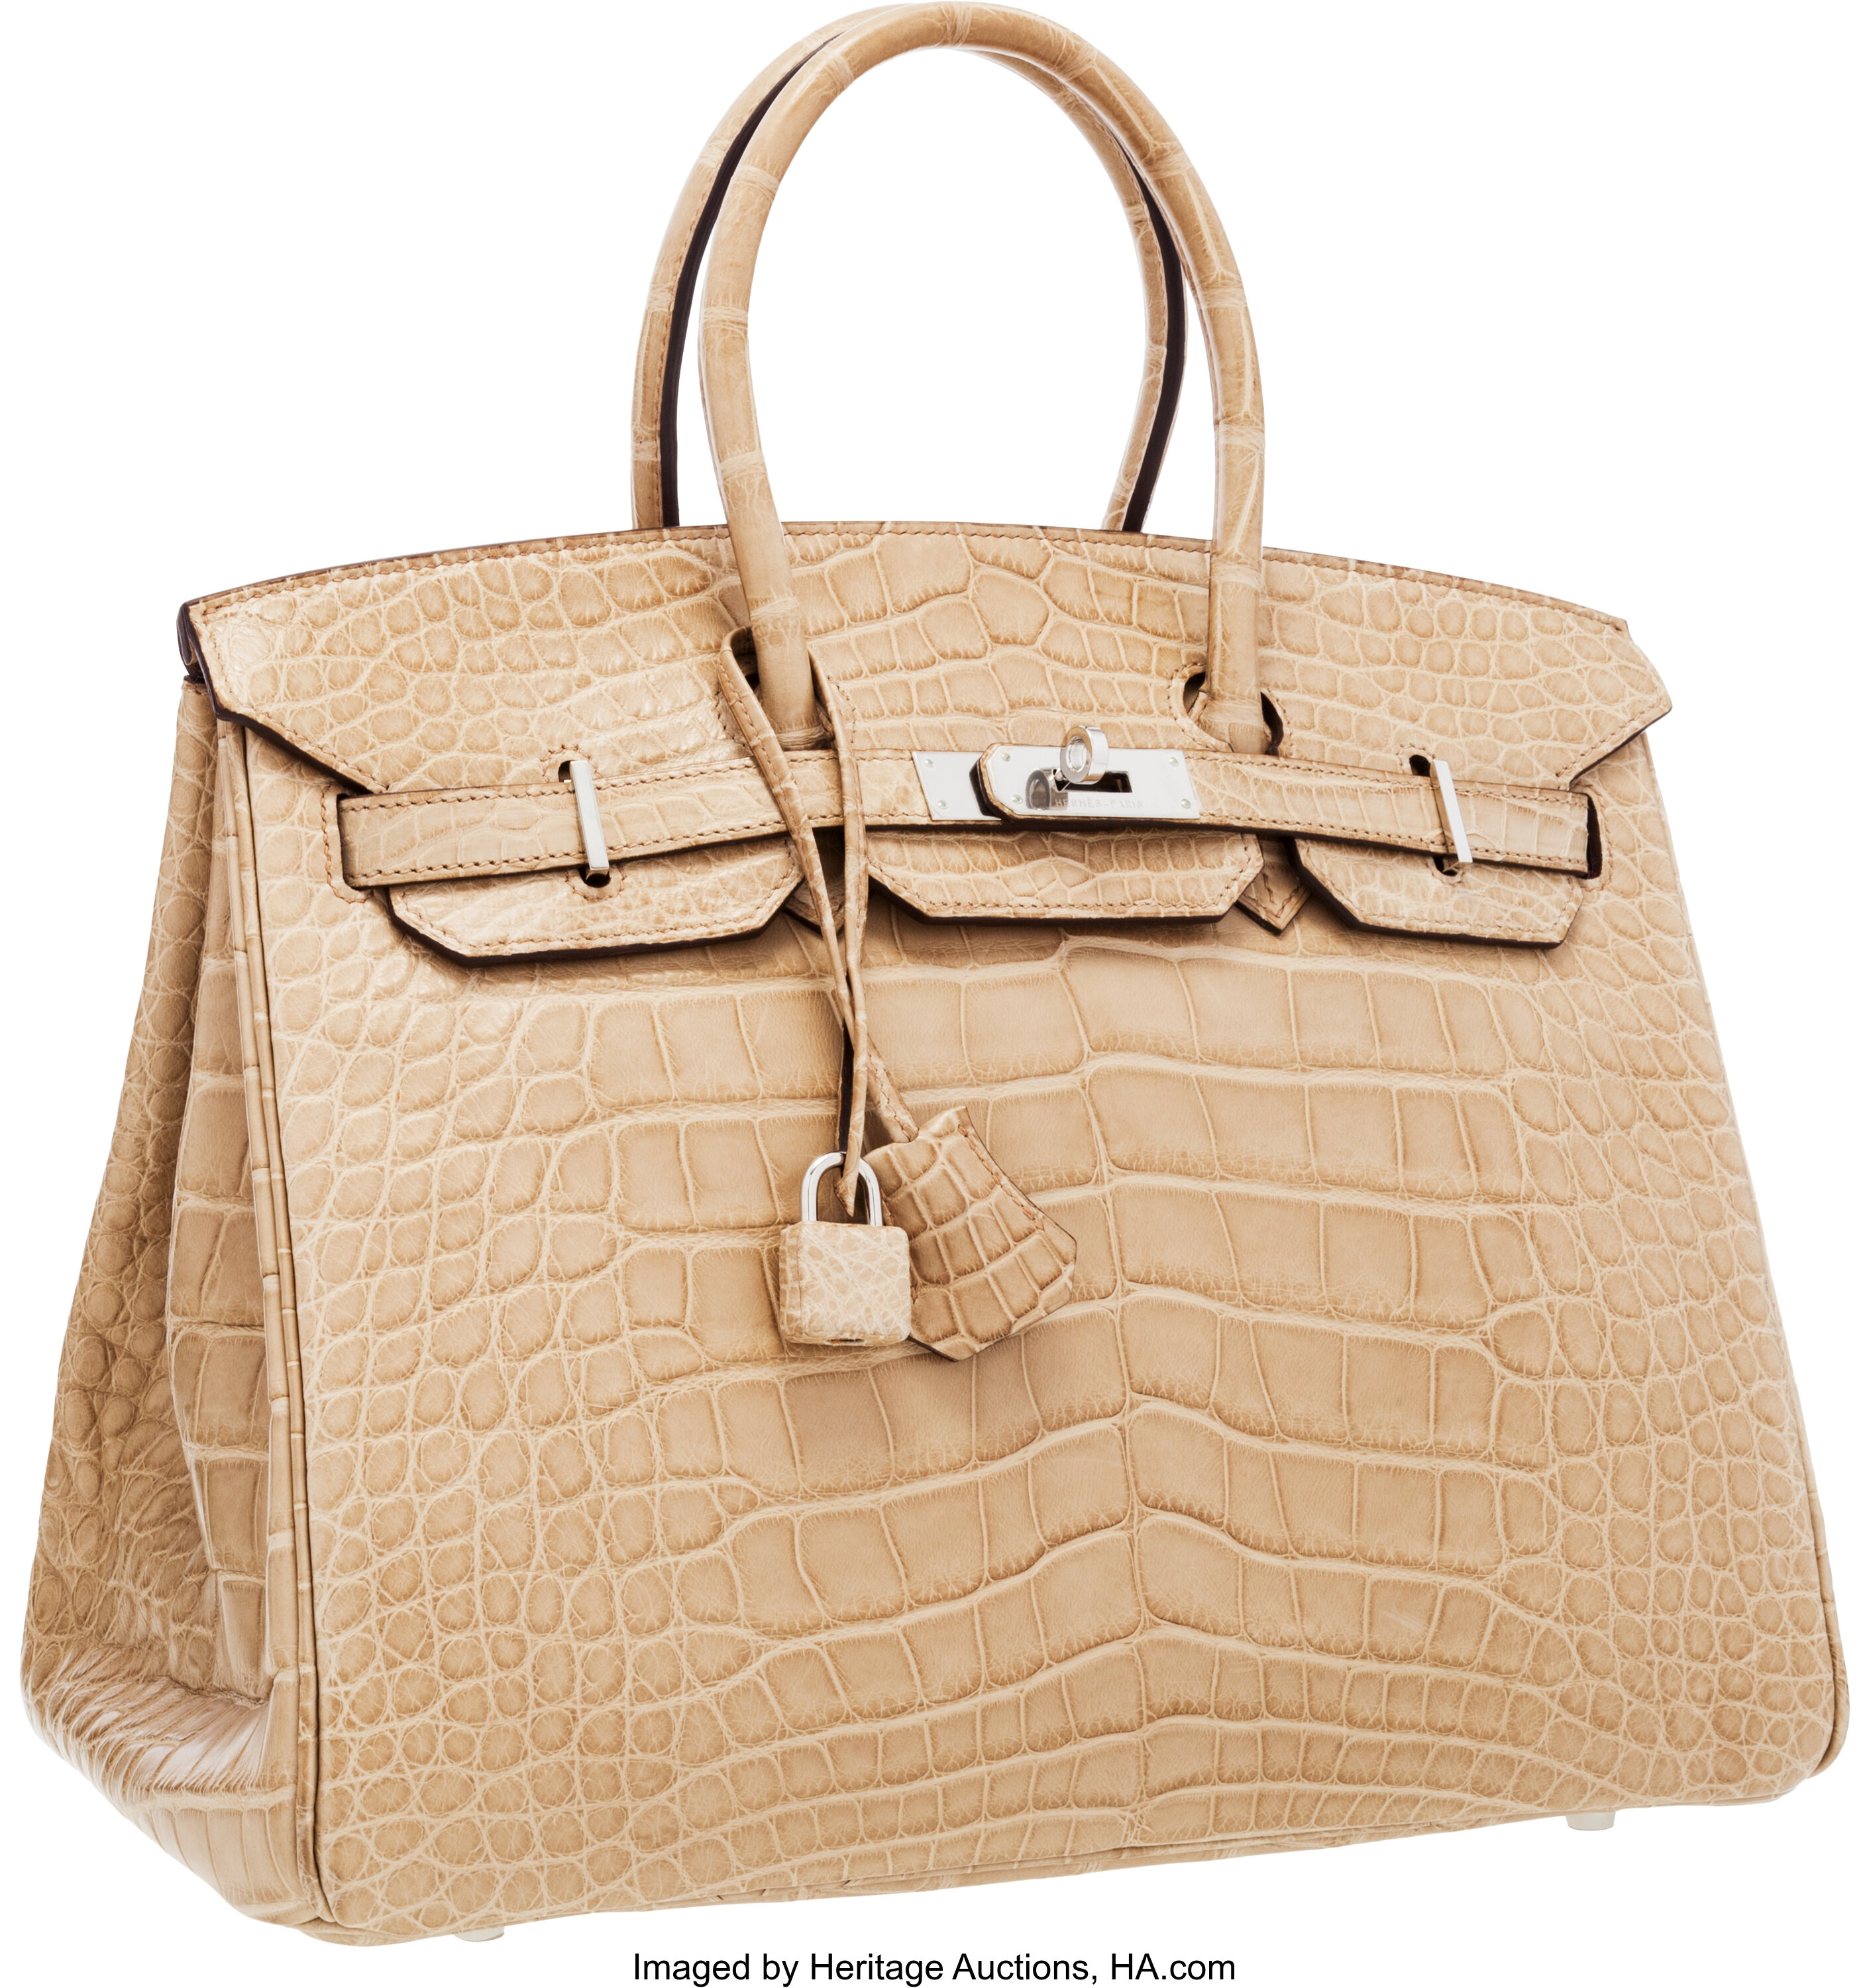 Hermes 35cm Gris Perle Togo Leather Birkin Bag with Palladium, Lot #56190